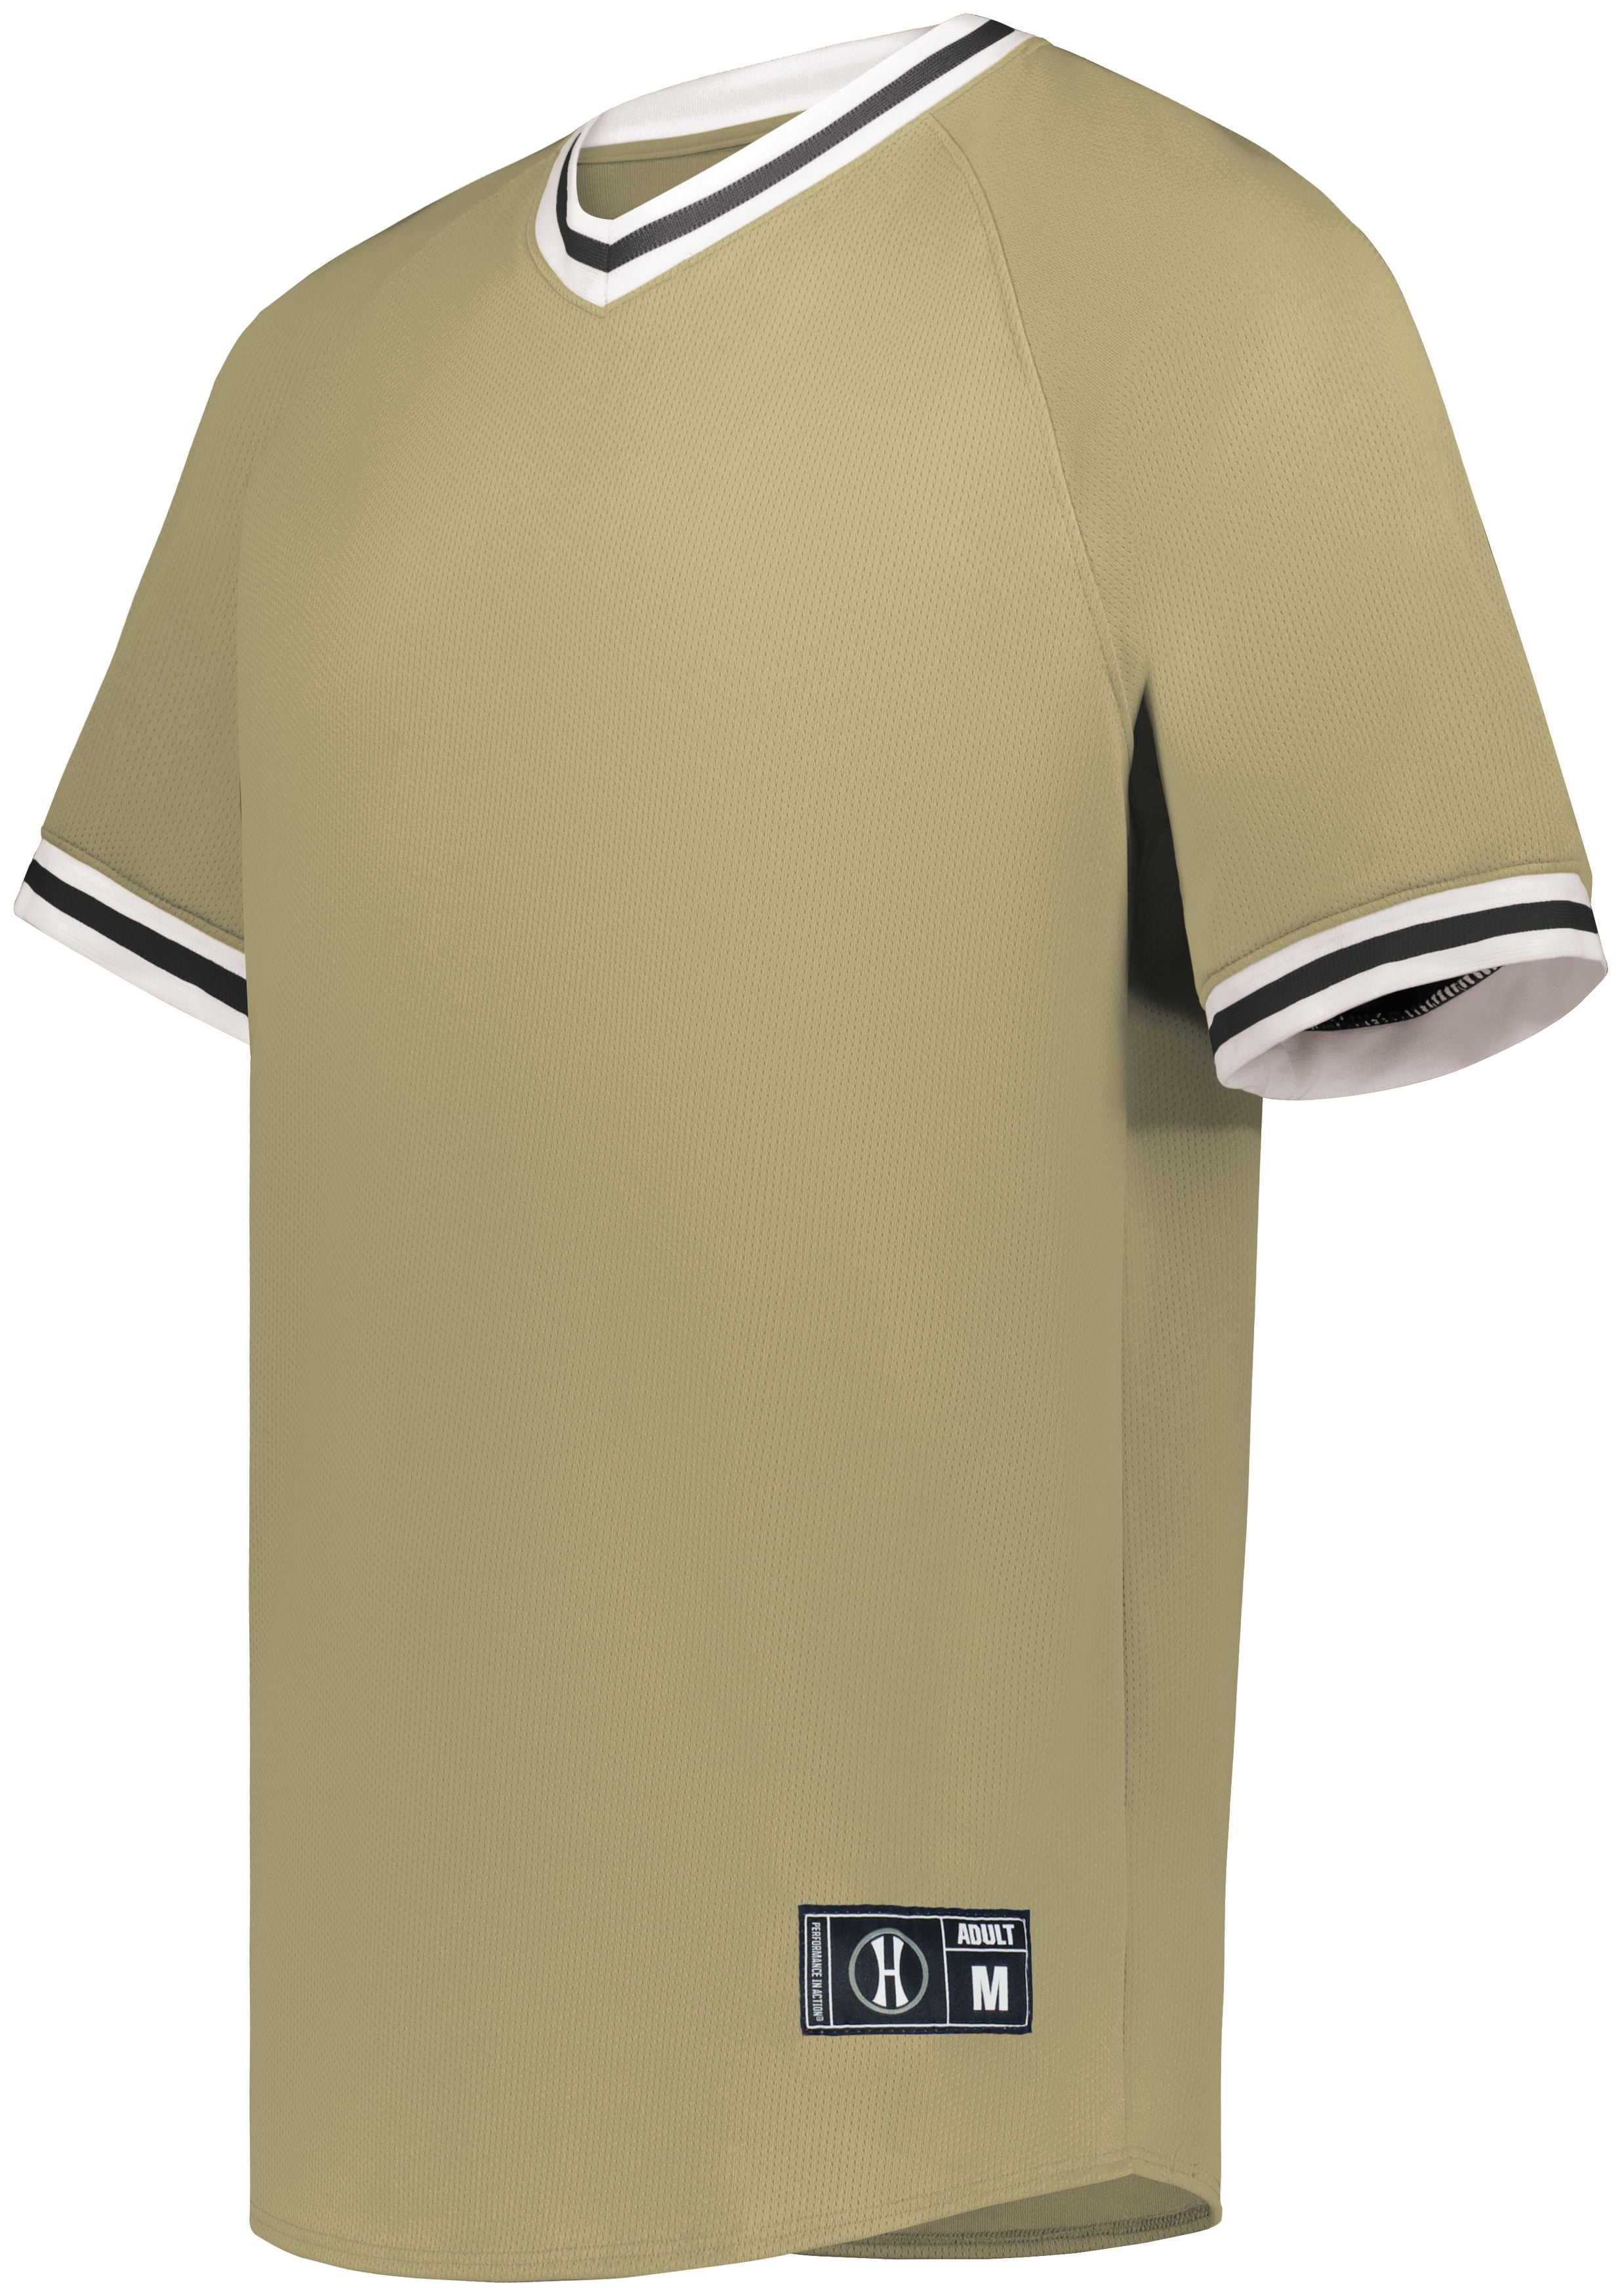 Holloway Sportswear XL Retro V-Neck Baseball Jersey Vegas Gold/White/Black  221021 